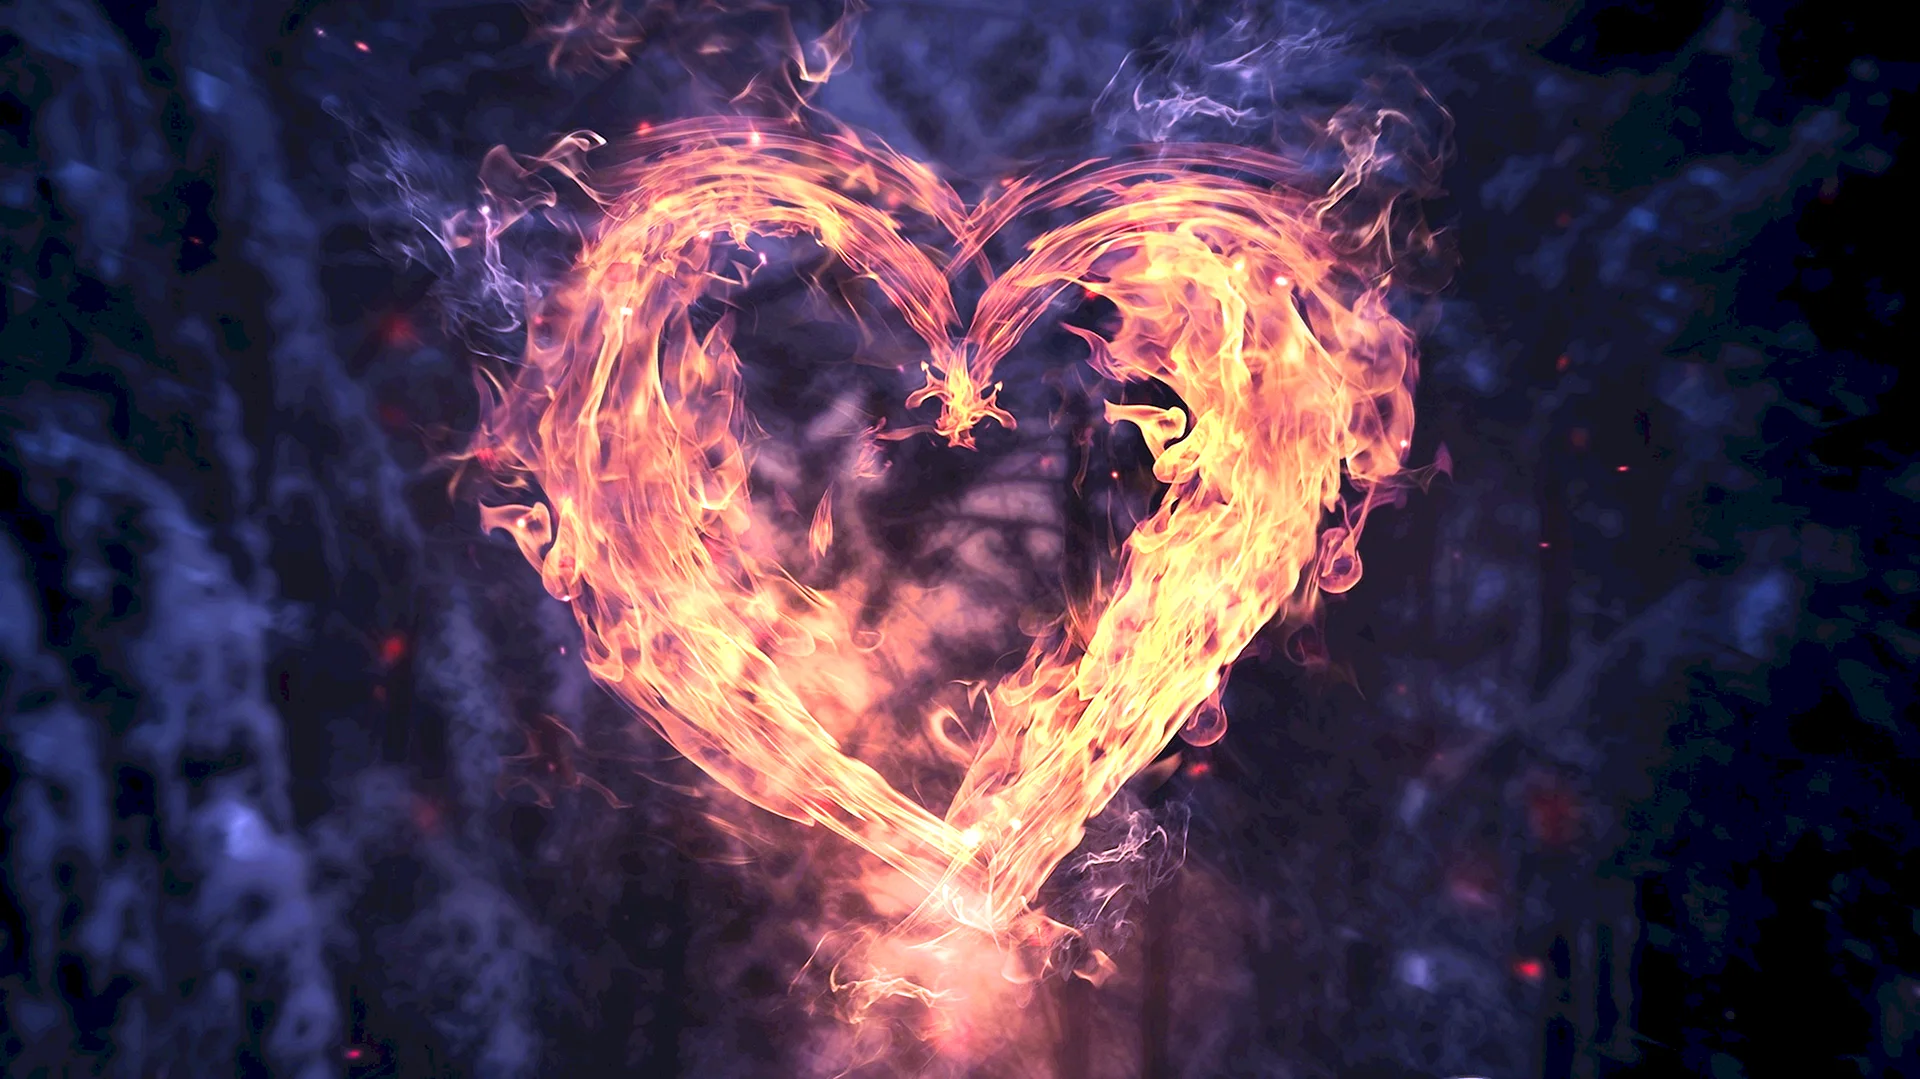 Burning Heart Wallpaper